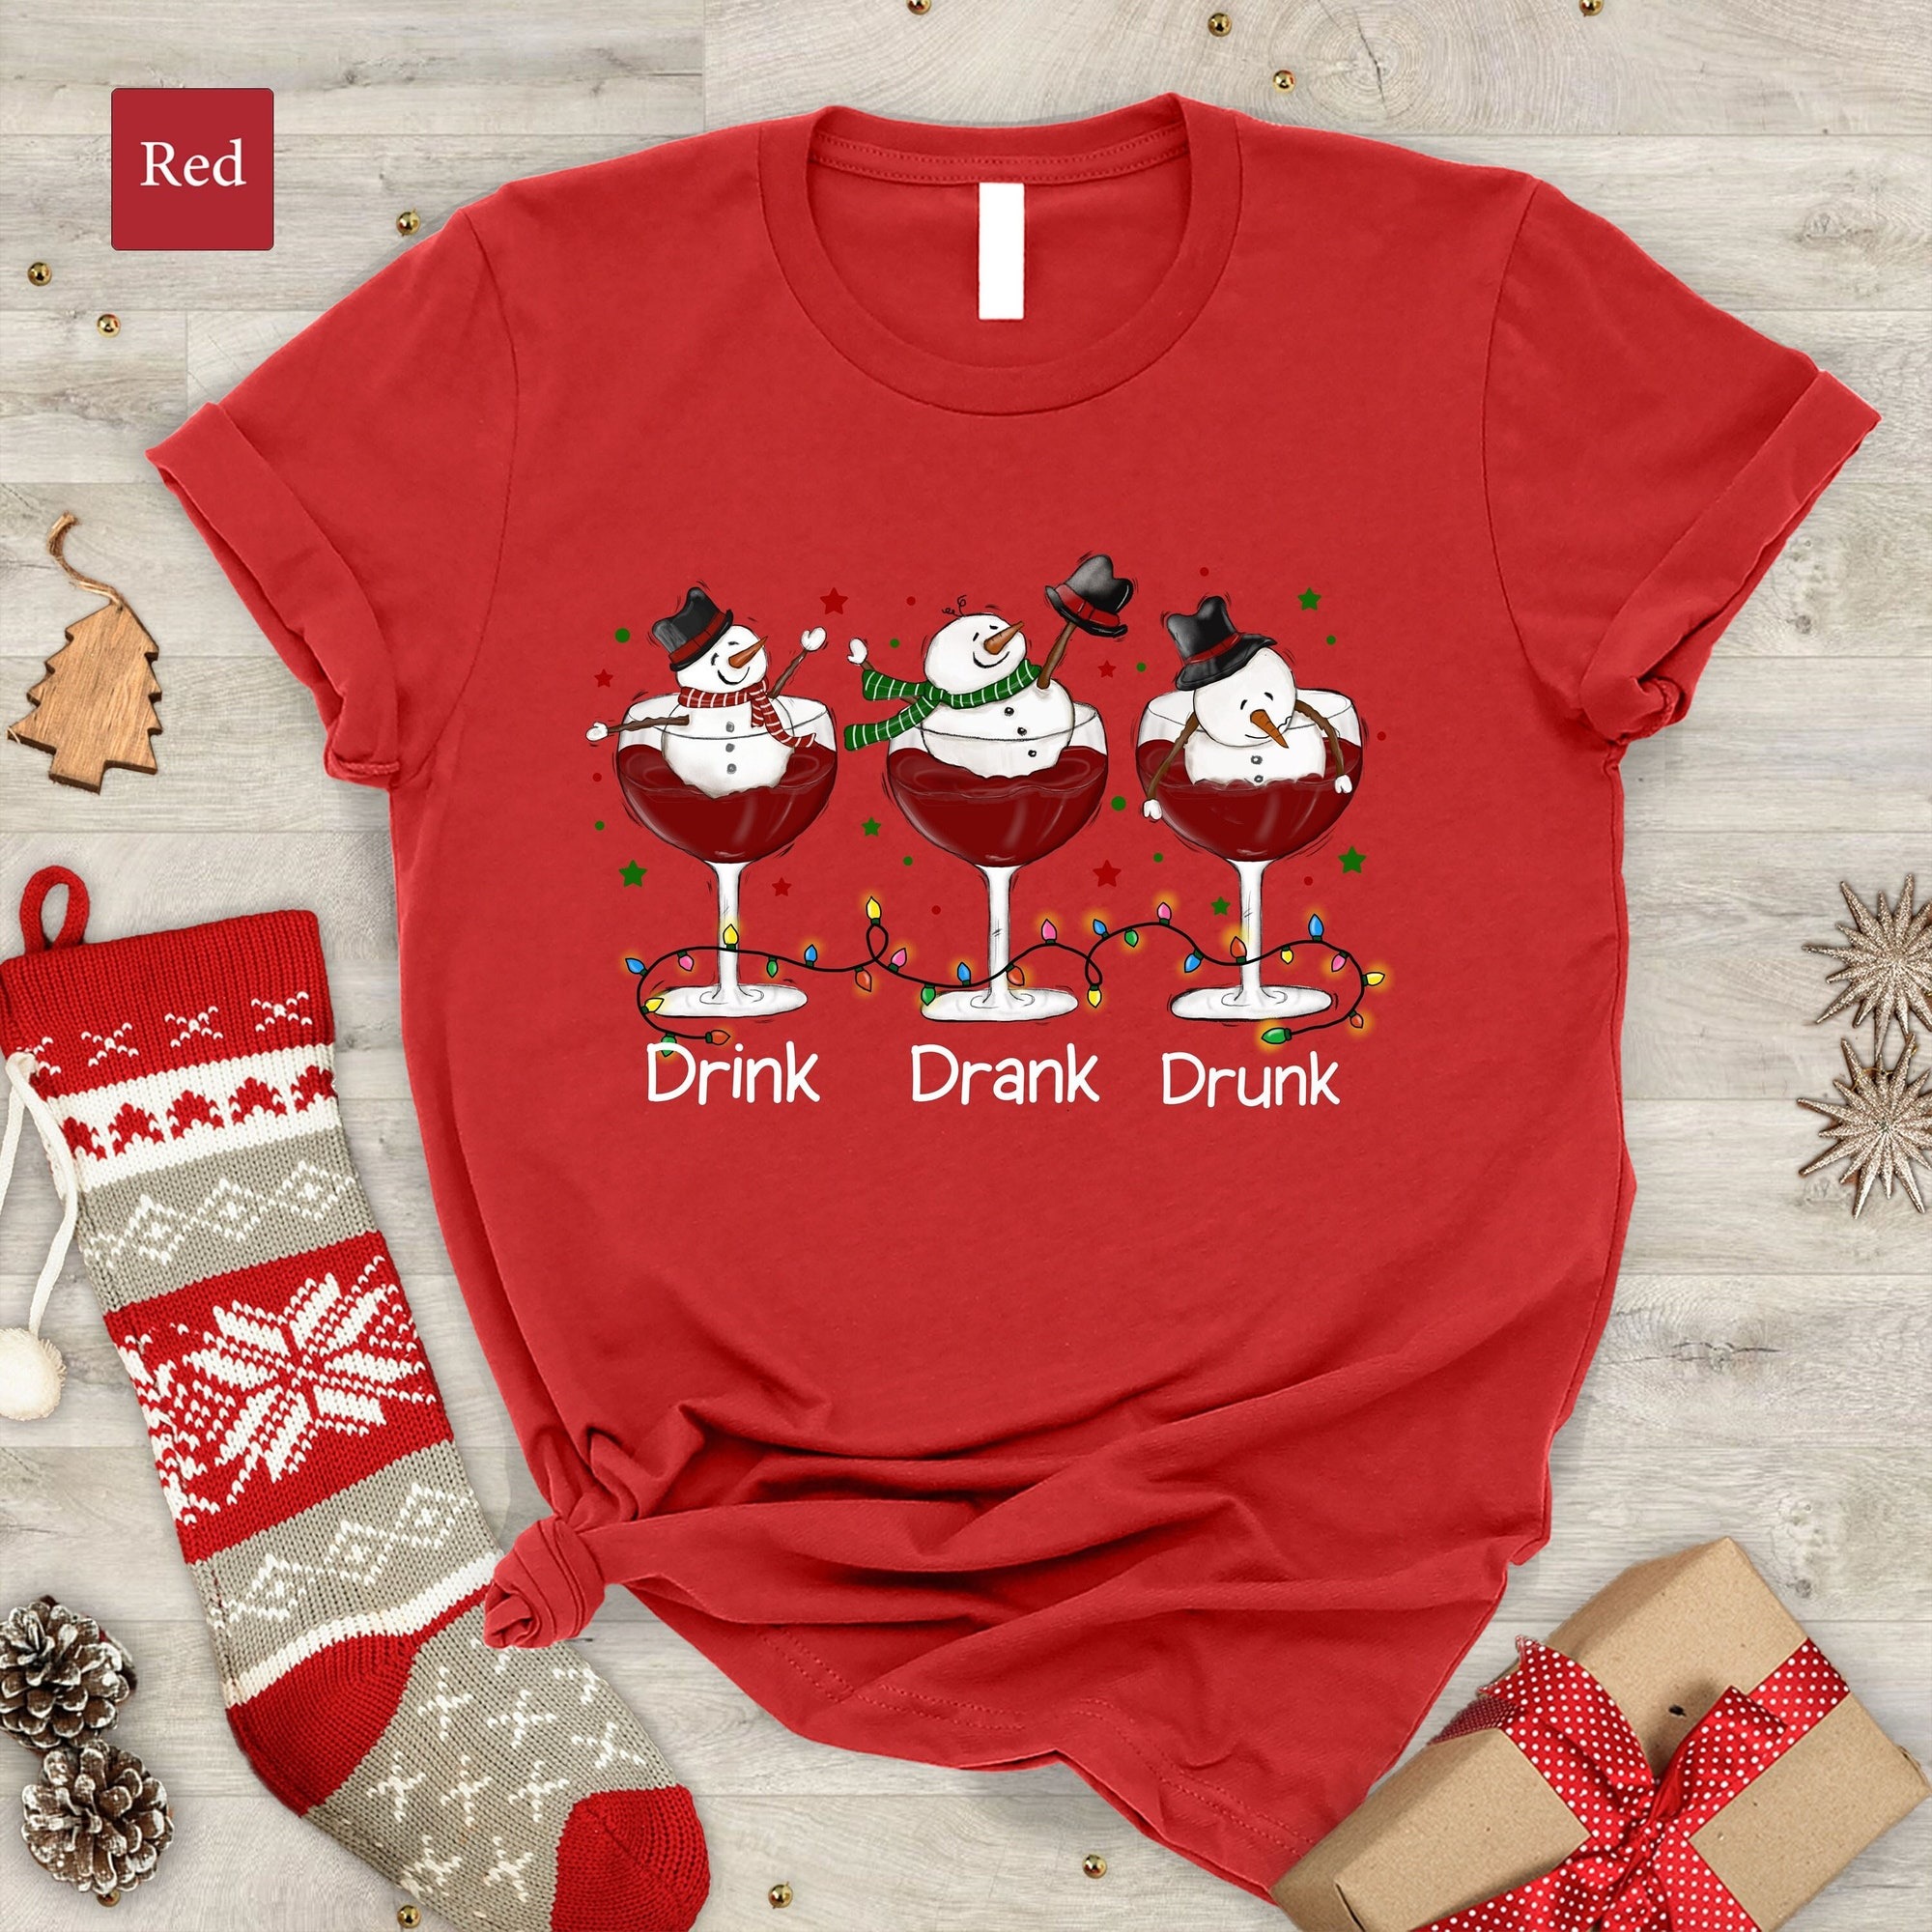 Drink Drank Drunk Shirt,Christmas Party T-Shirt,Winter Tee,Wine Lover,Drinking Shirt,Holiday Gift Shirt,Snowman Shirt,Girls Christmas